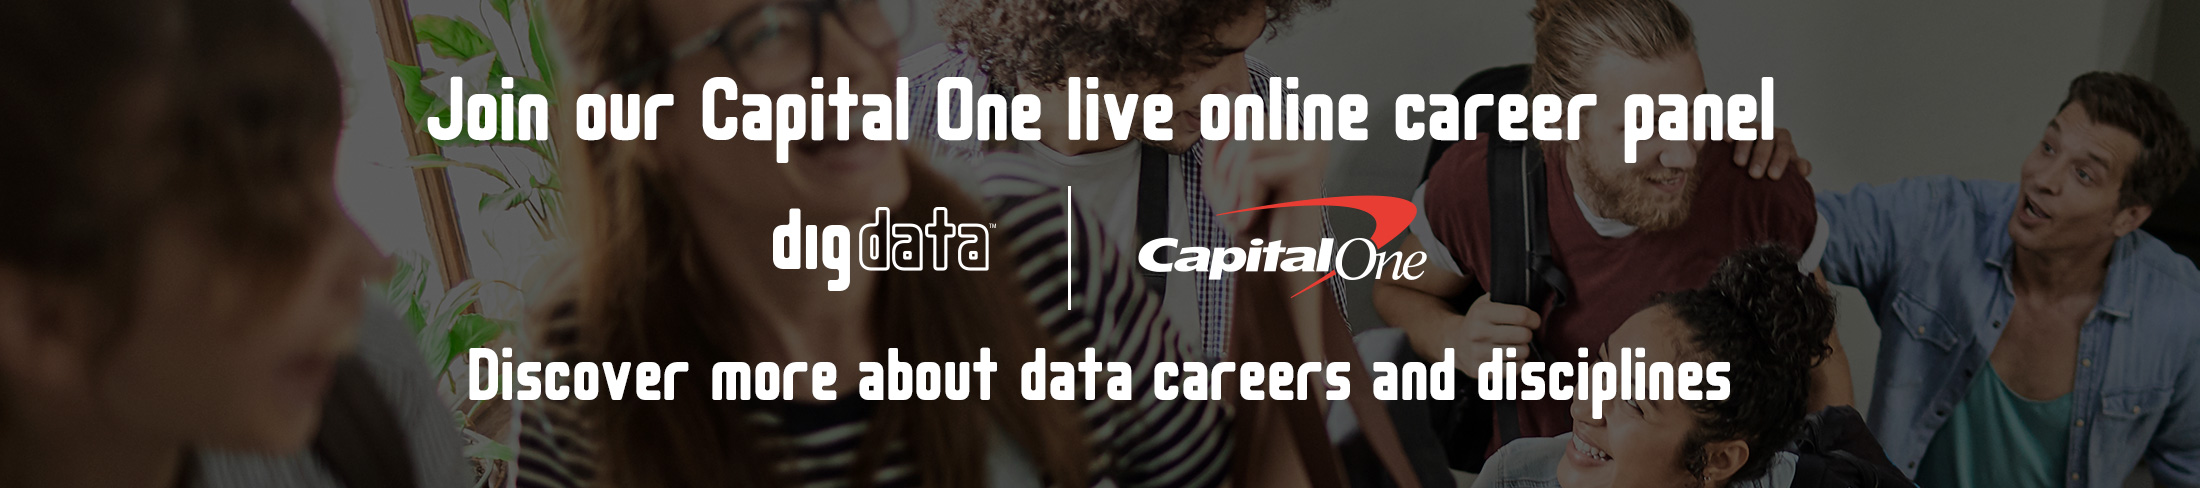 Capital One Career Panel Banner